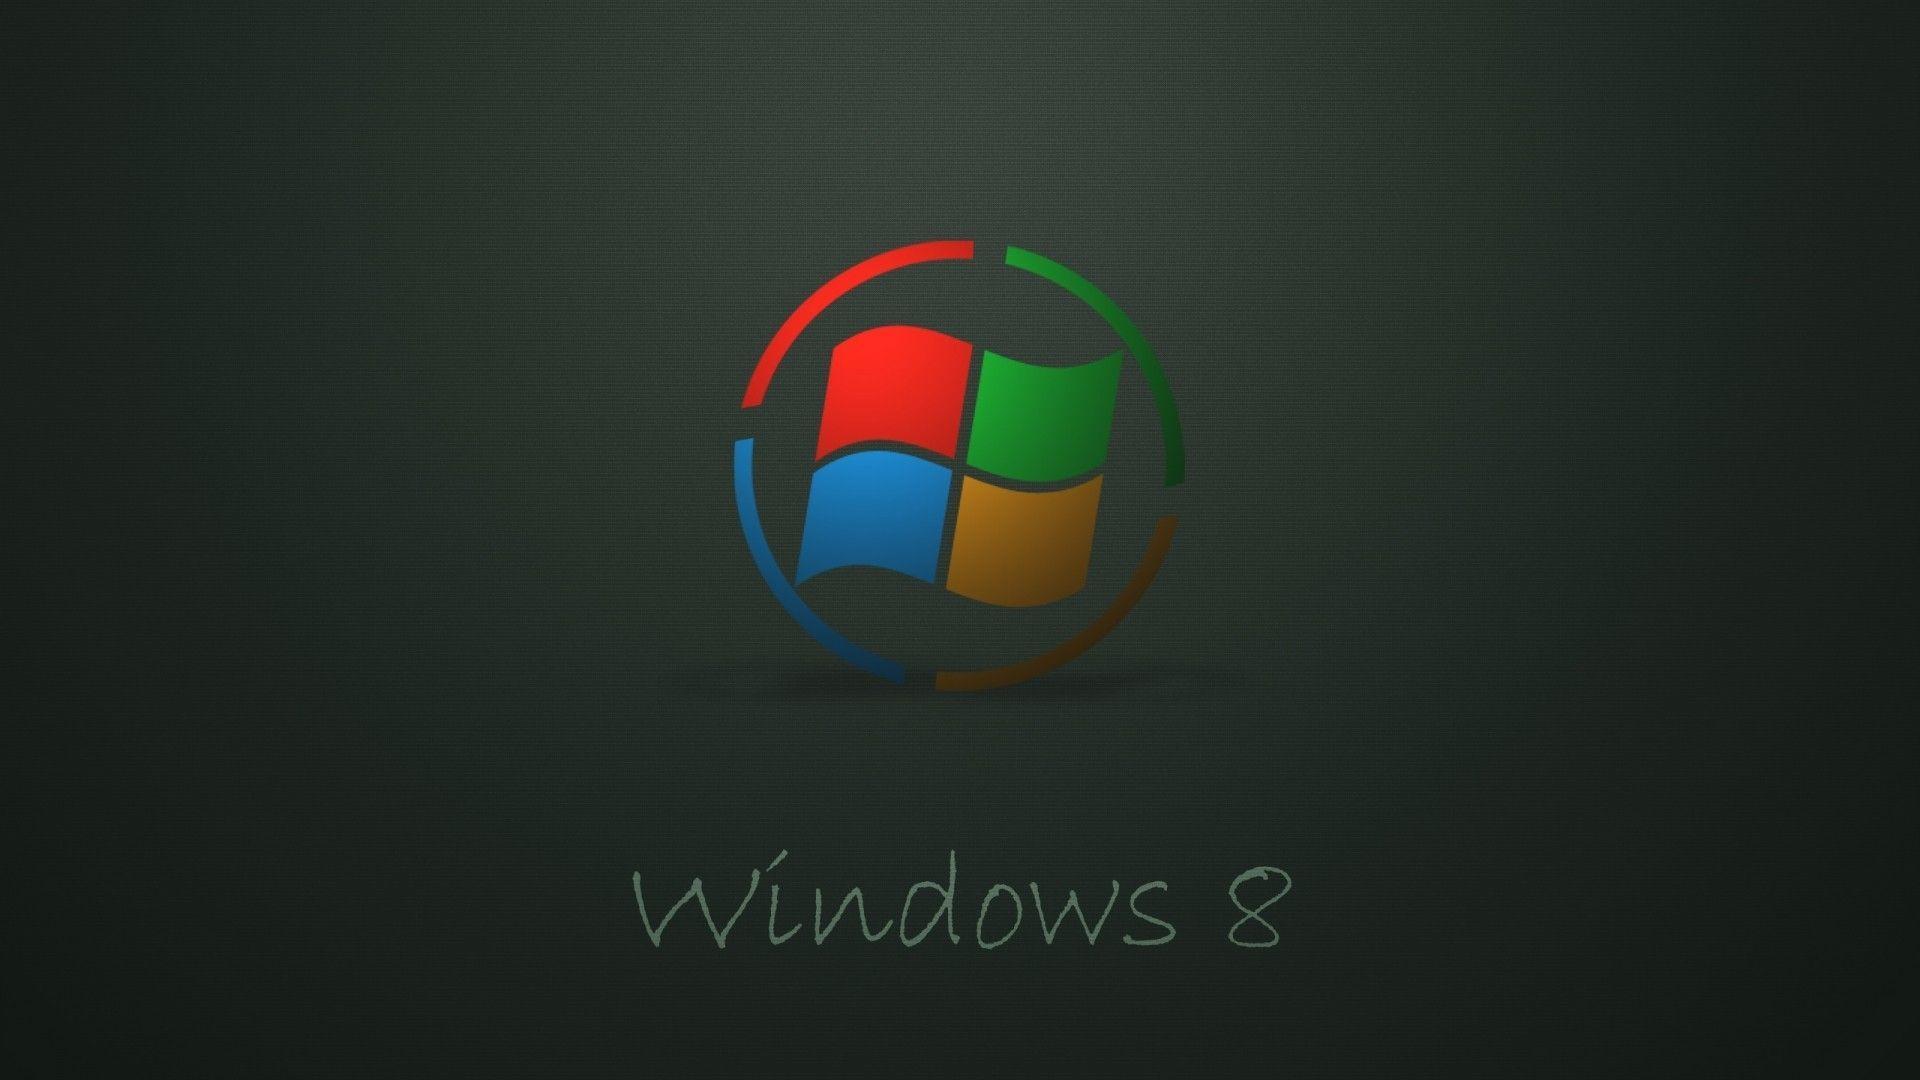 Windows 8 Brand Logo Design Background HD Wallpaper Image 64914